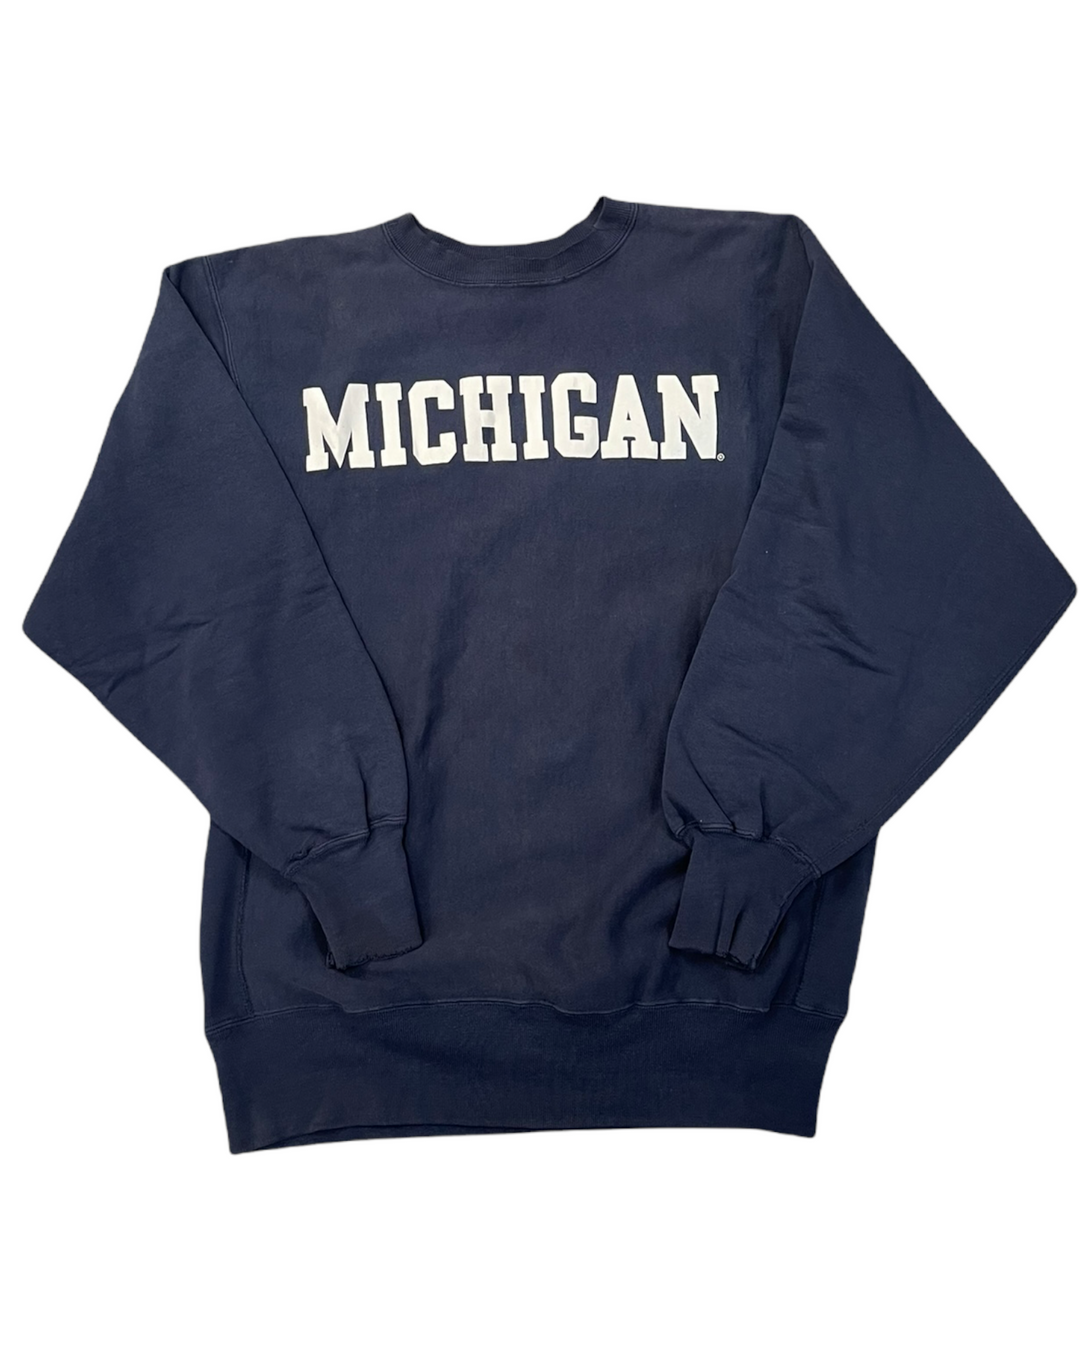 Michigan Rare Vintage Champion Sweatshirt